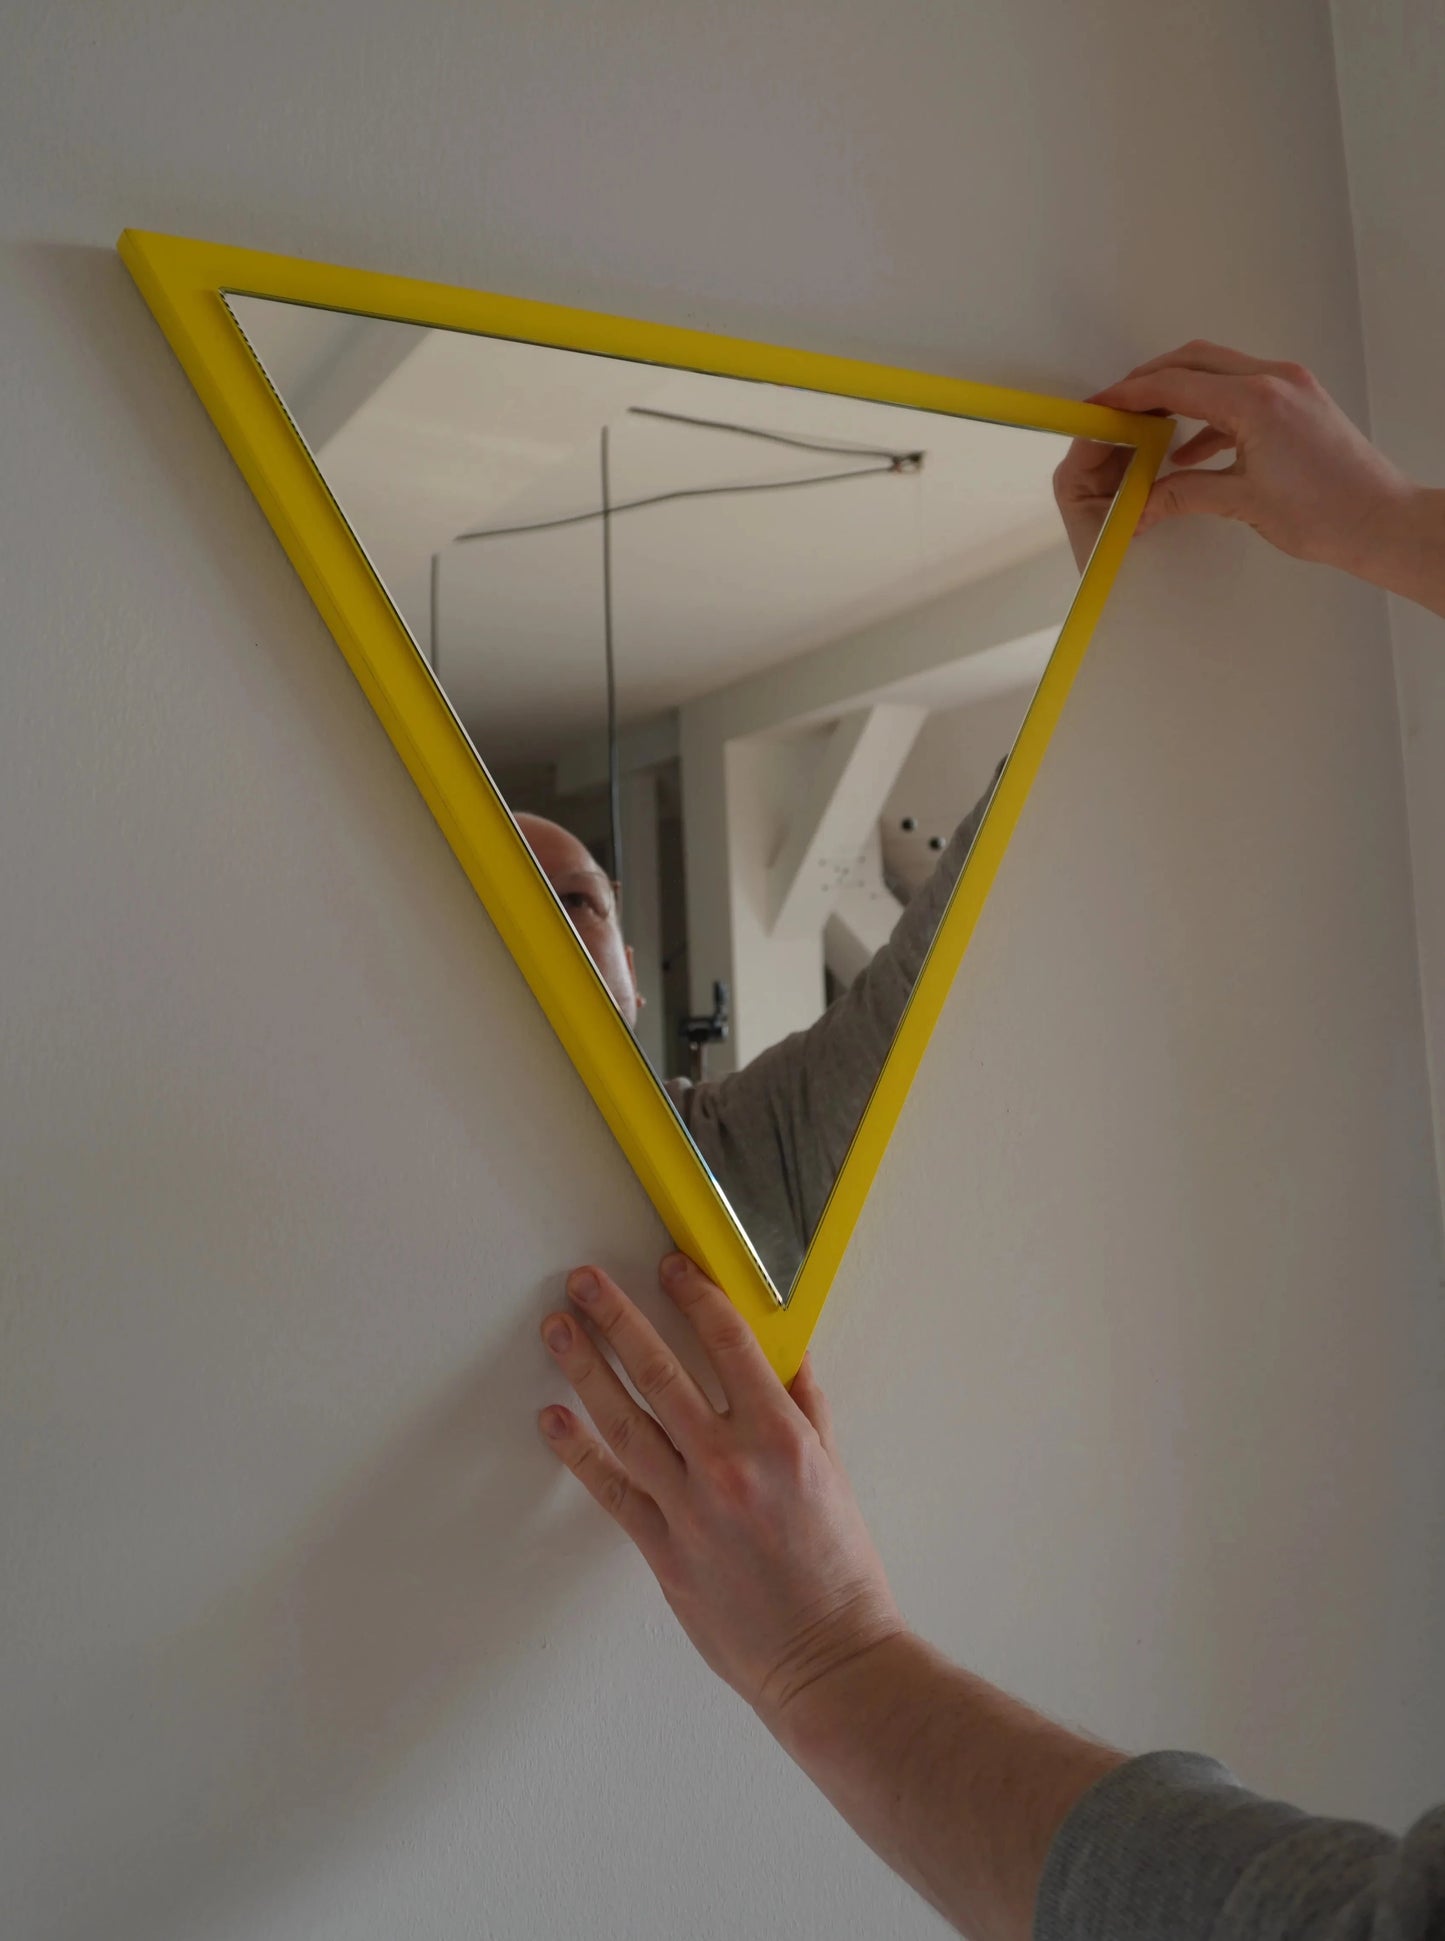 The basic mirror - yellow